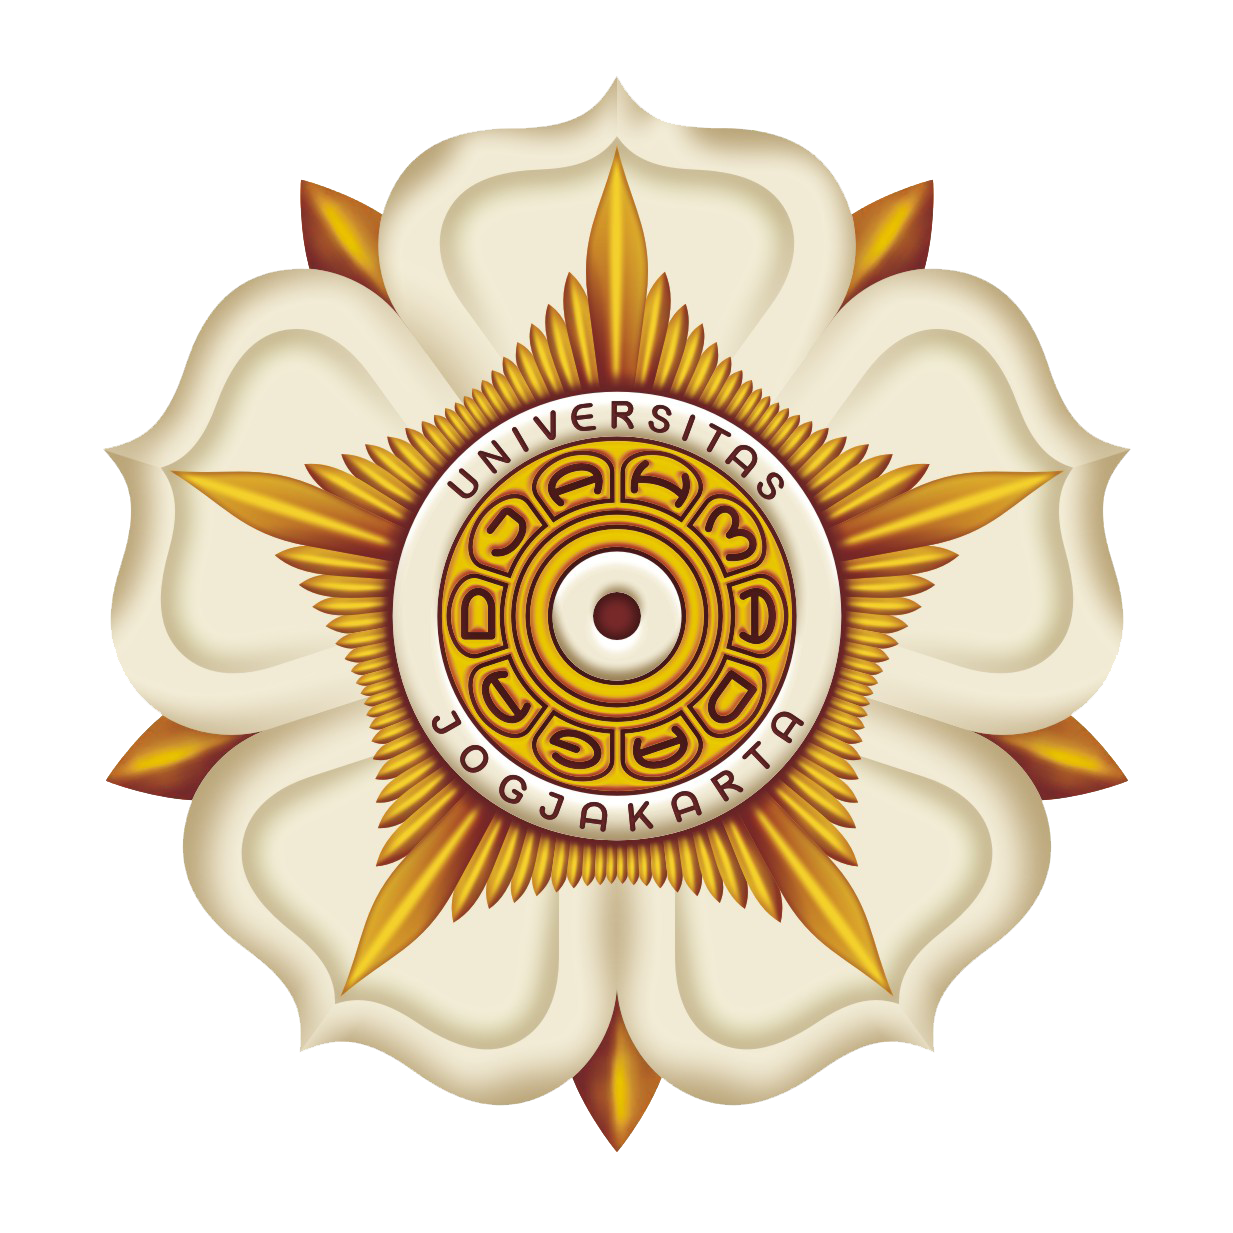 1588140006-Logo-Universitas-Gadjah-Mada.png